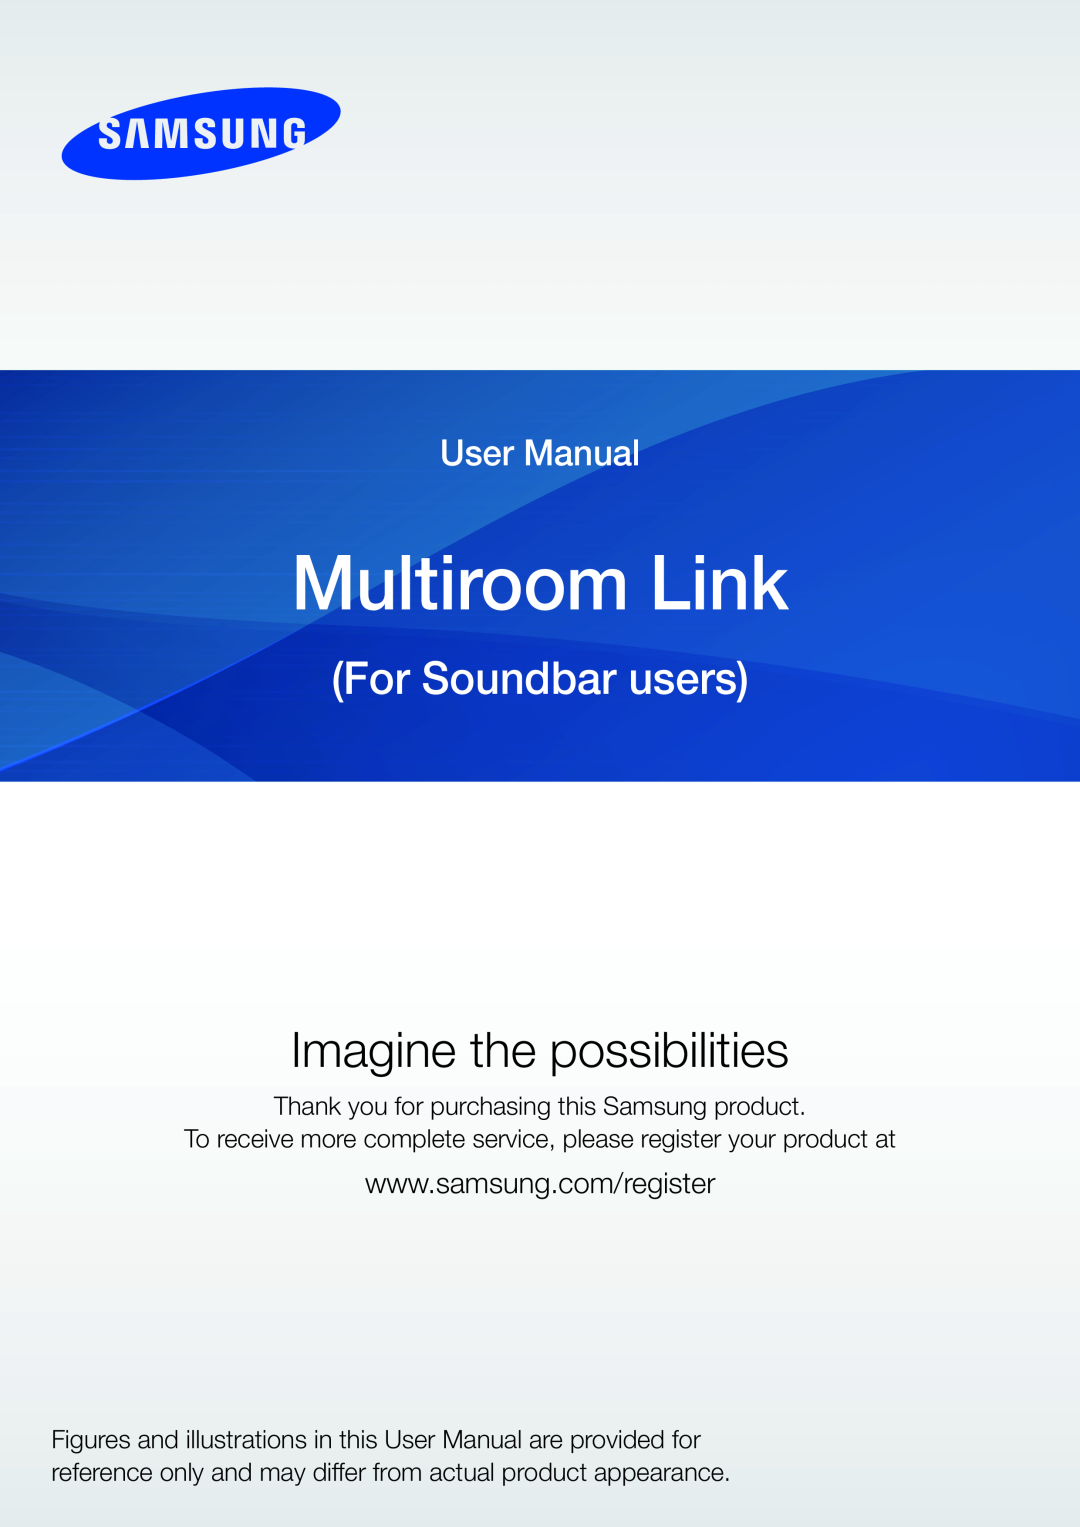 Samsung HW-J8501/EN, HW-J7500/EN manual Multiroom Link, Imagine the possibilities, For Soundbar users, User Manual 